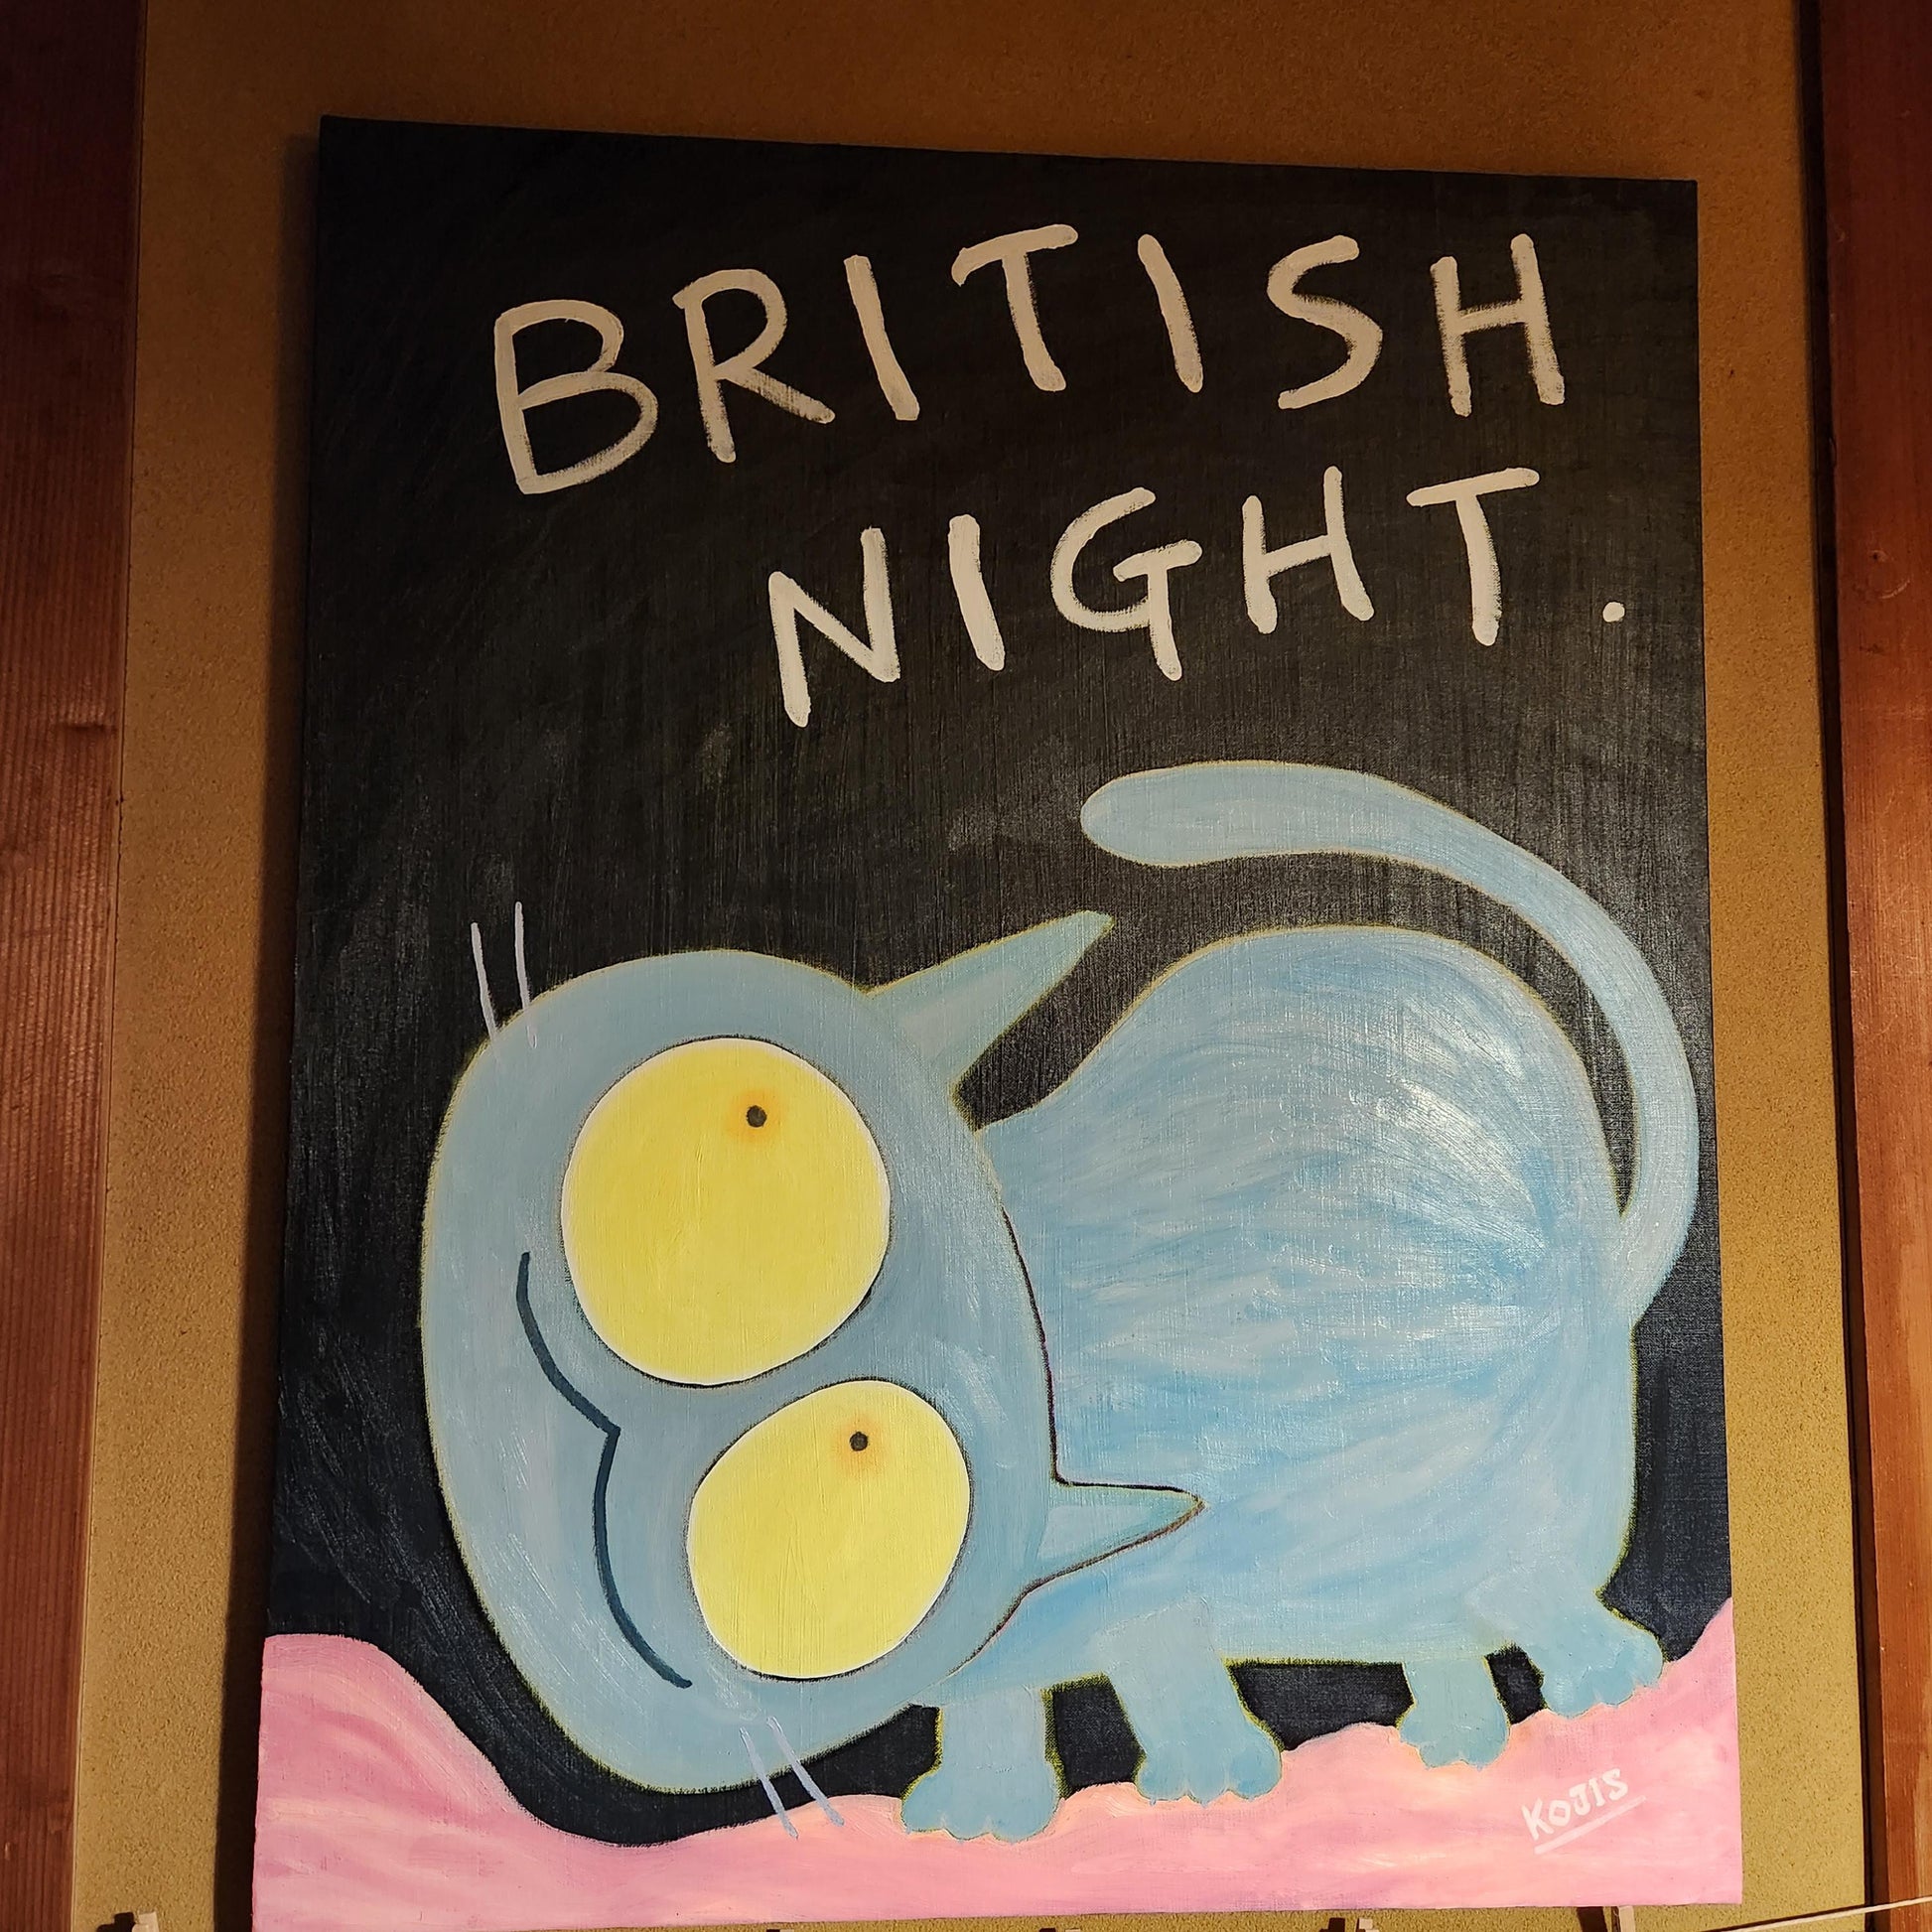 British night - FROM ARTIST